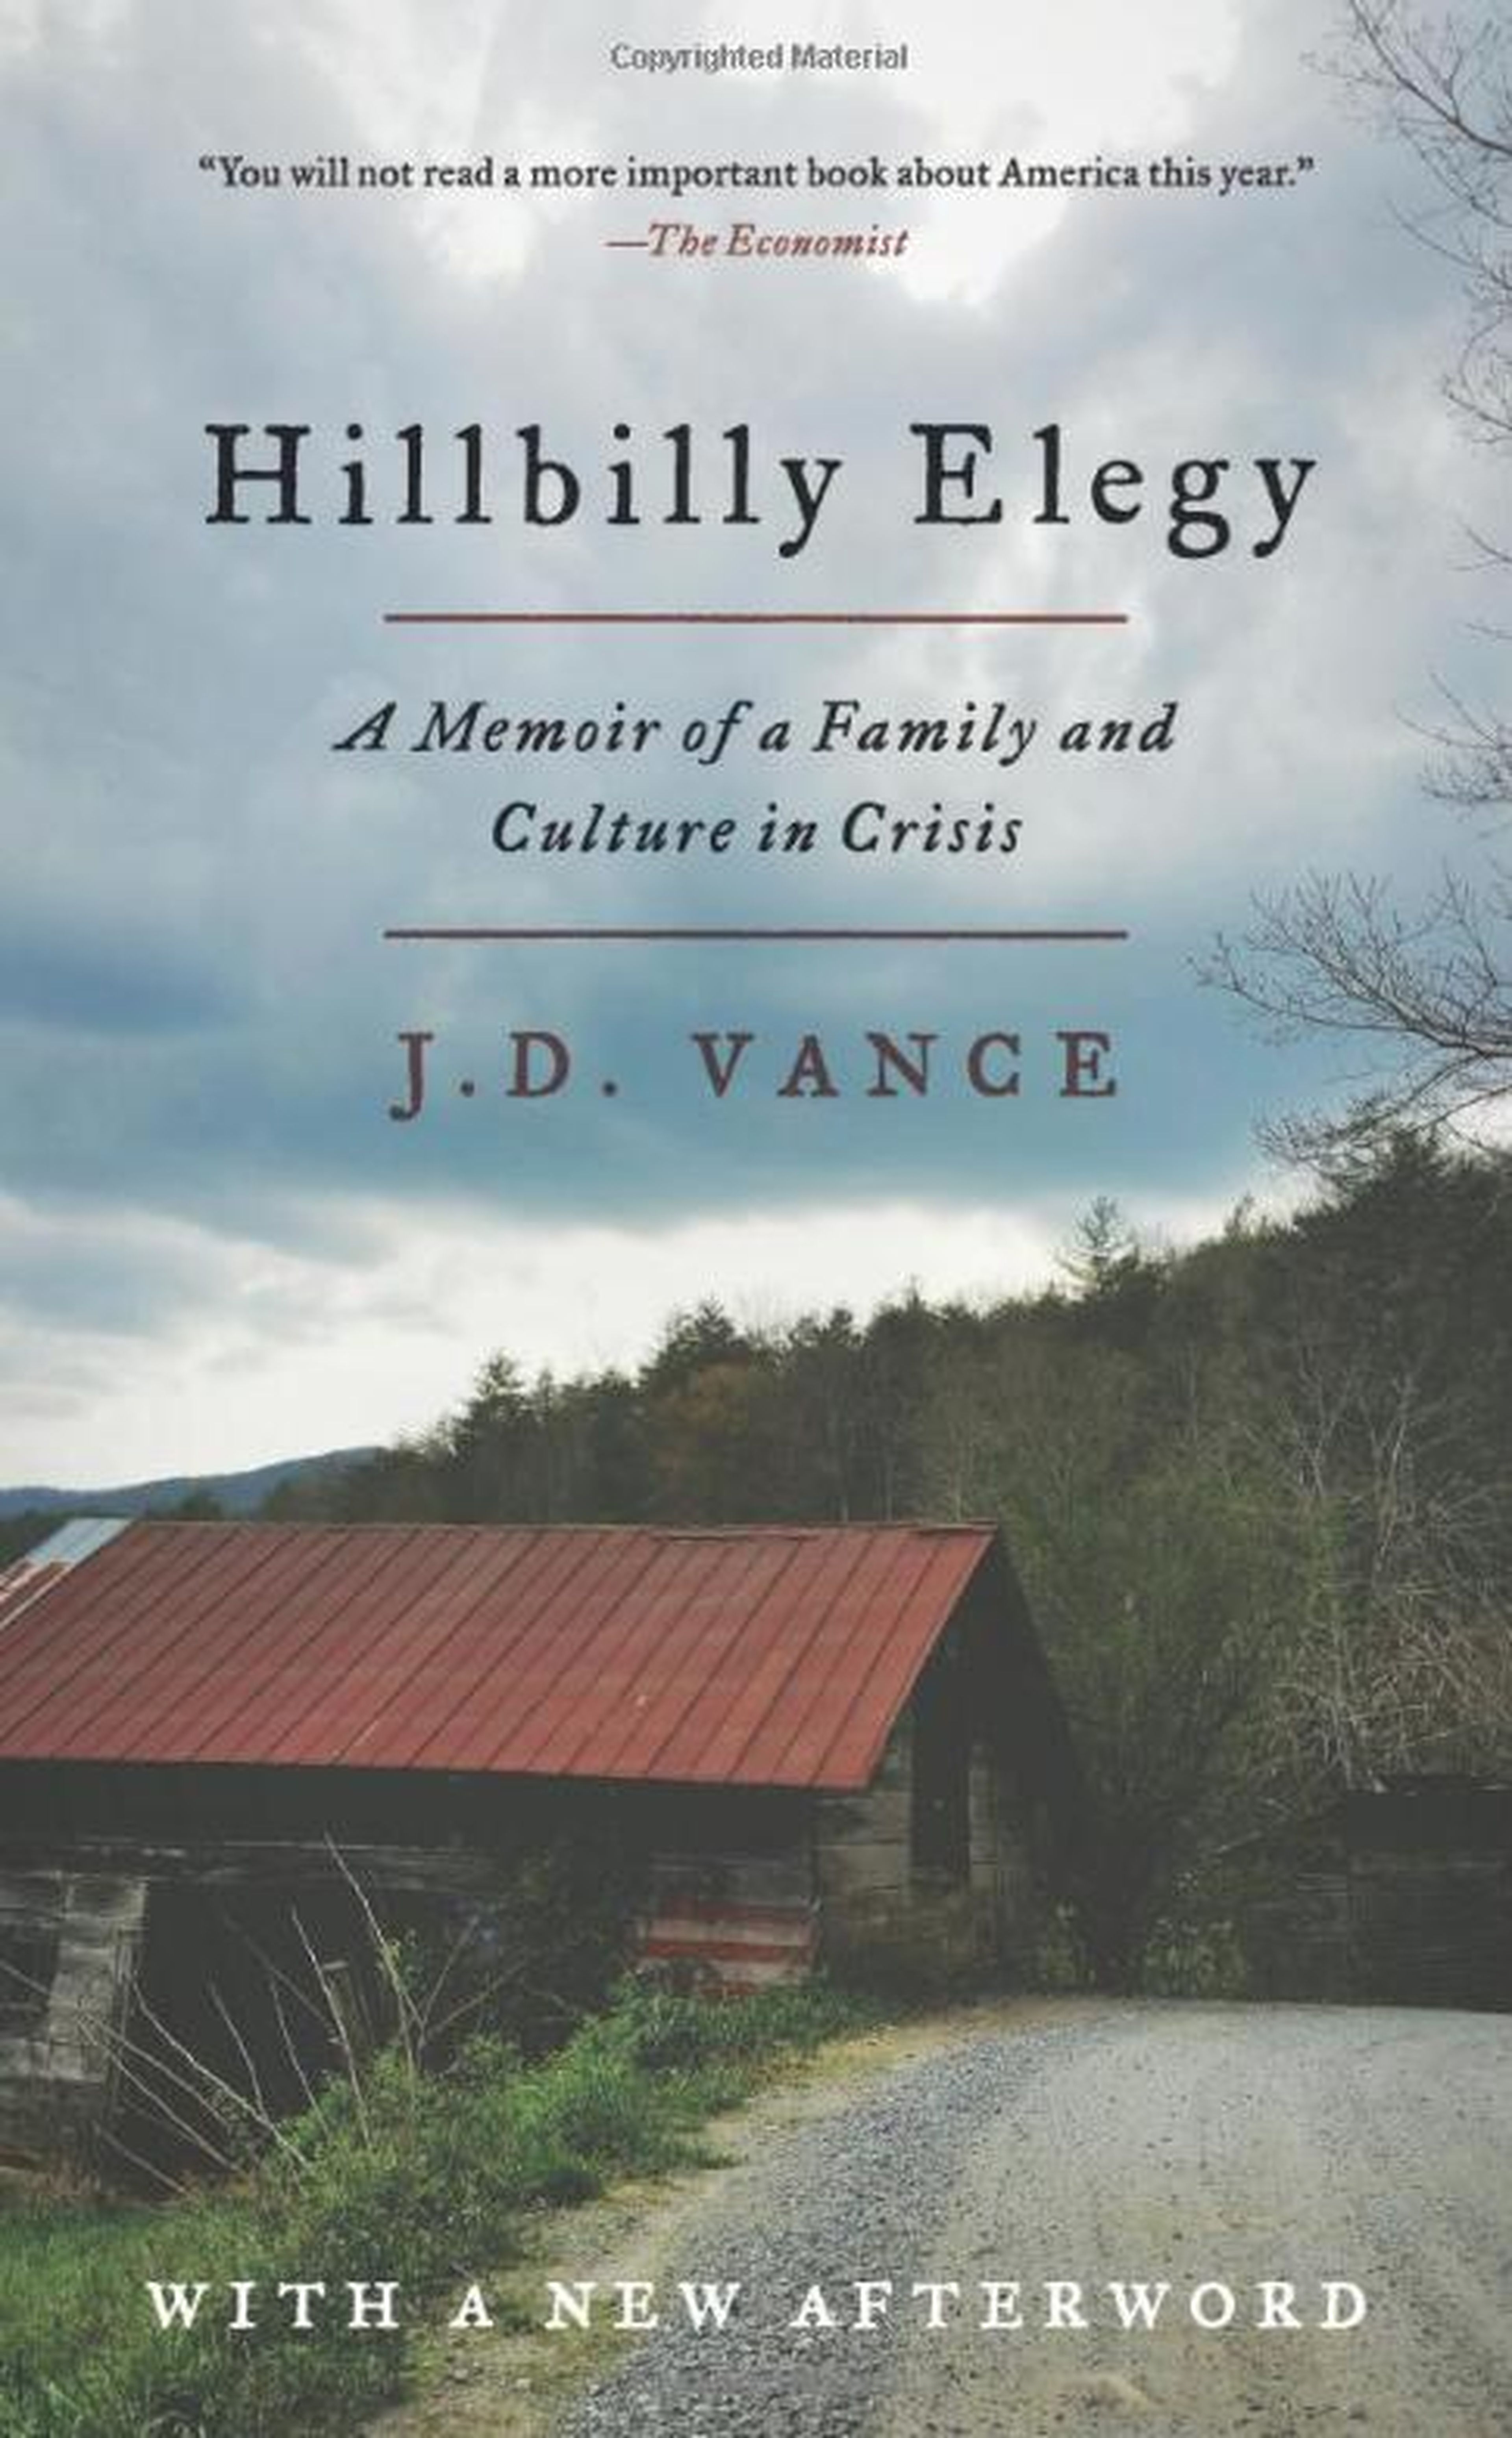 "Hillbilly Elegy" by J.D. Vance